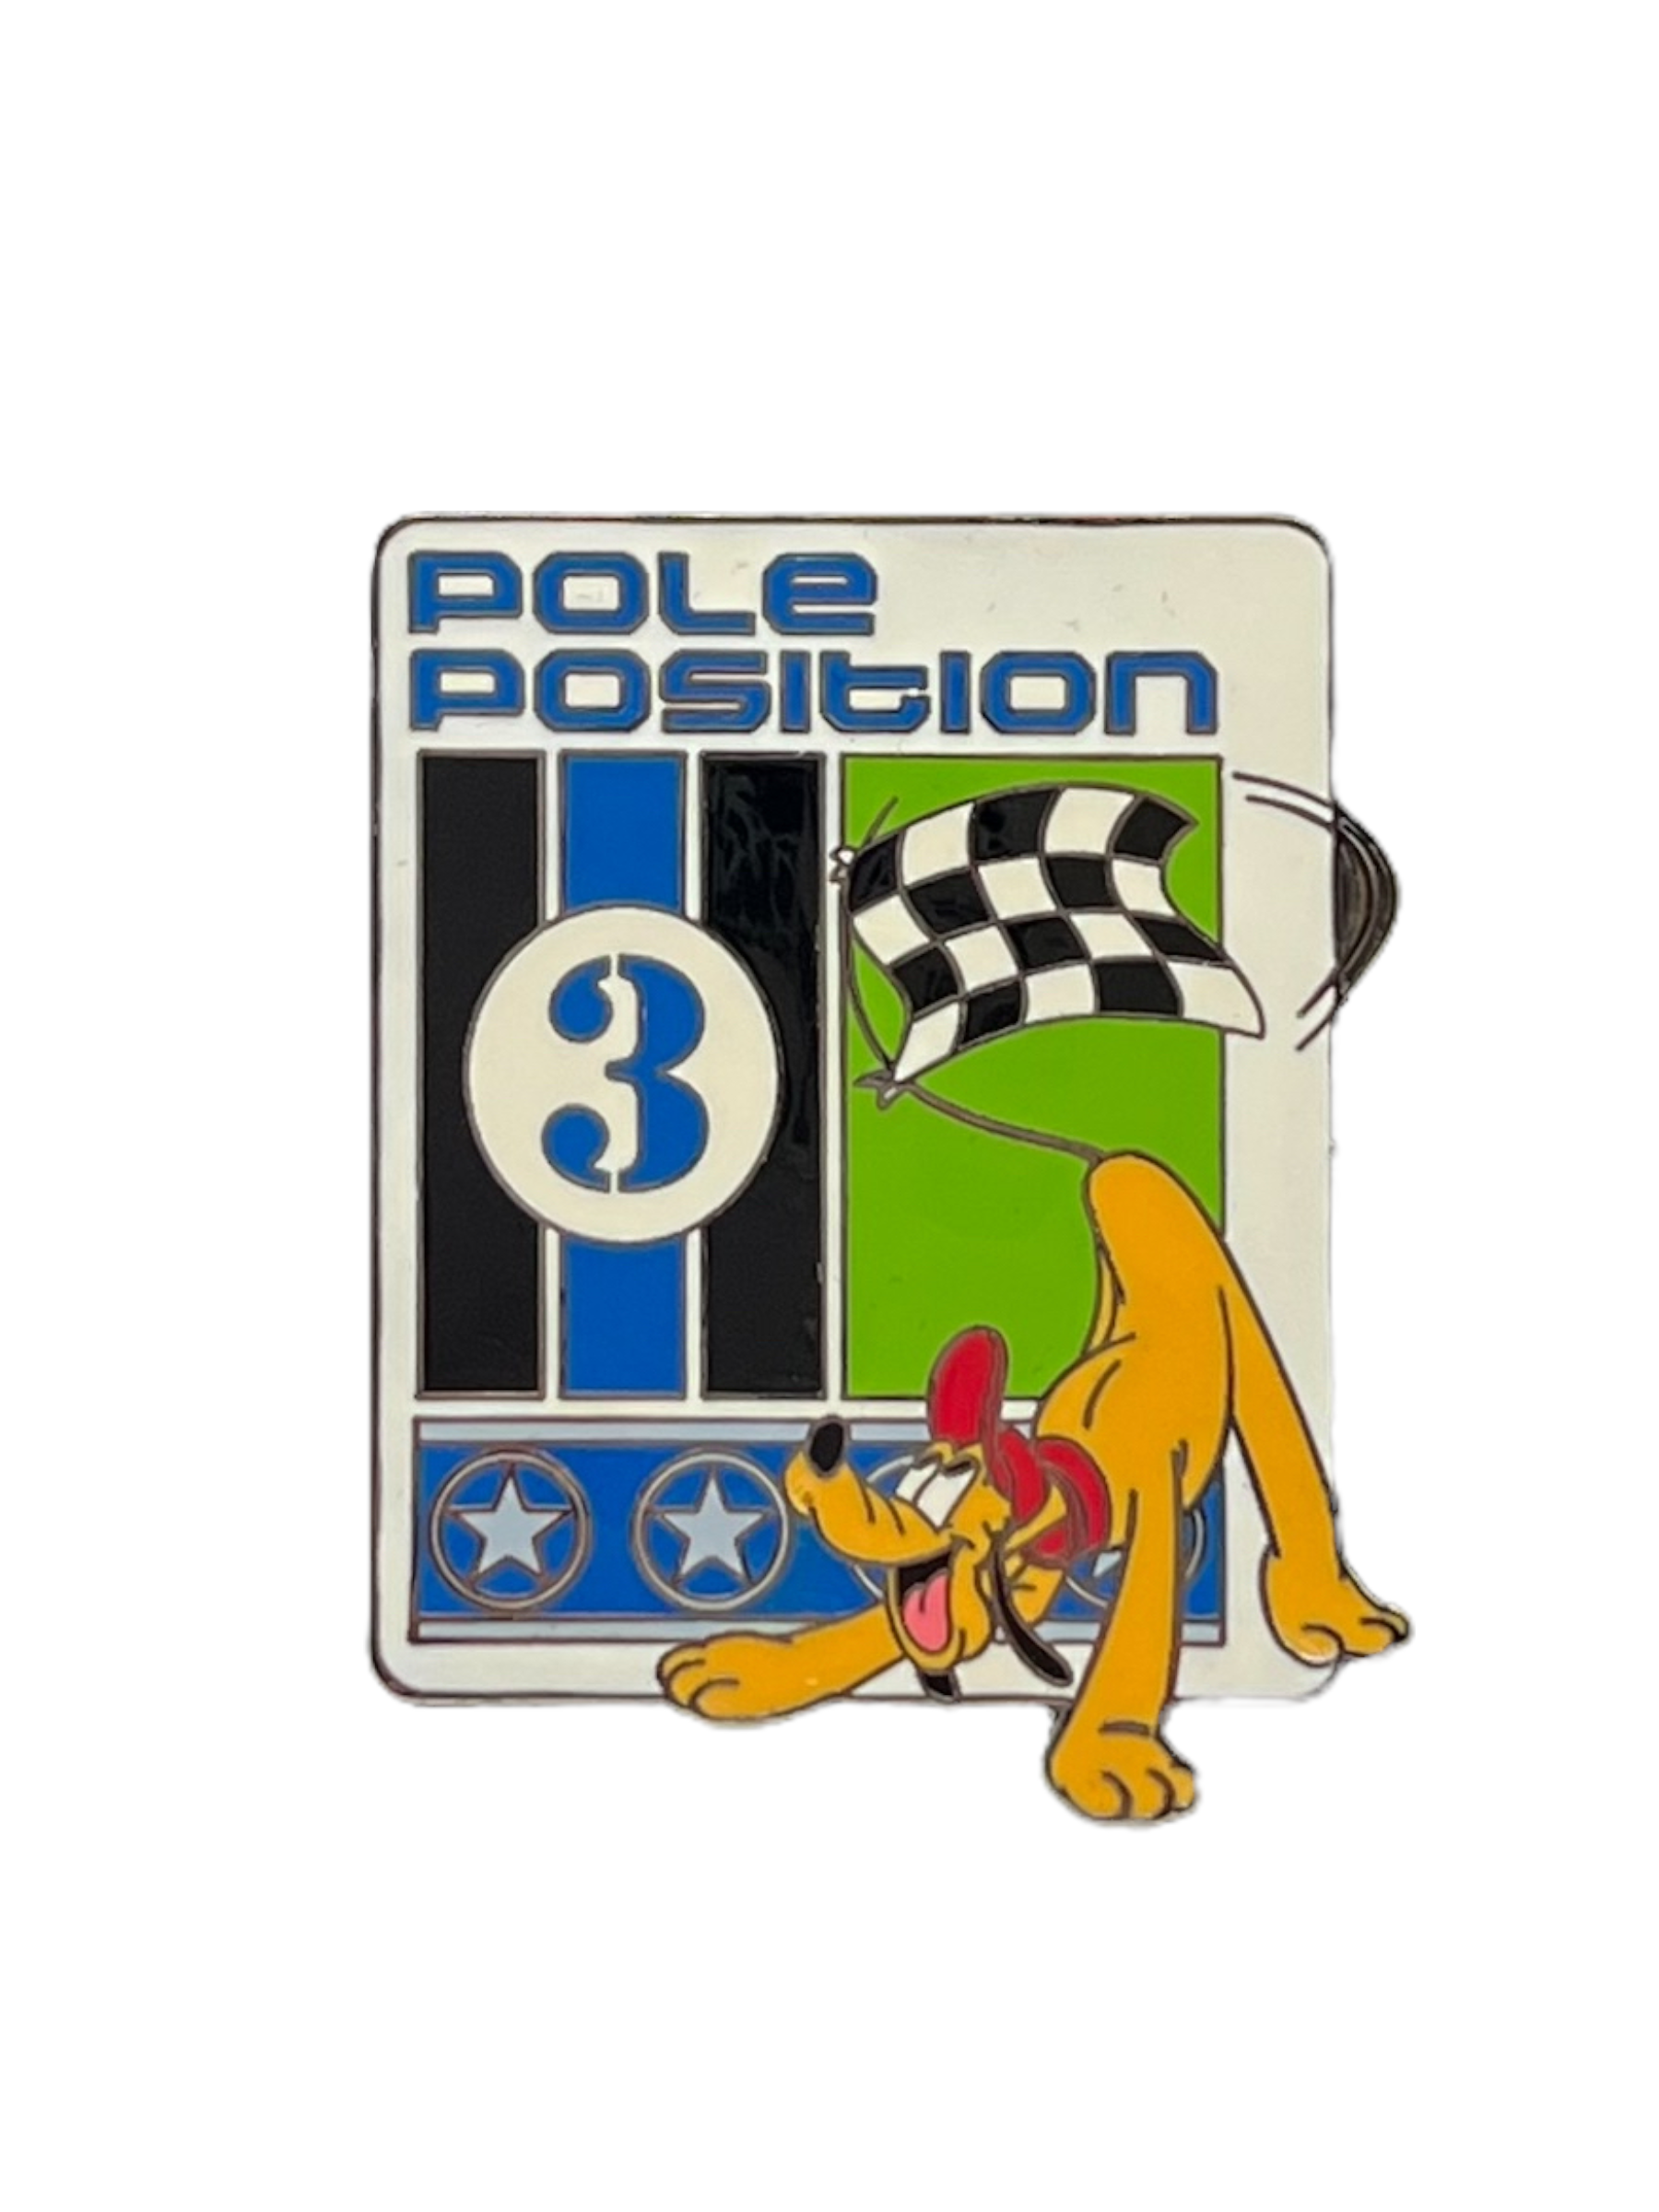 Disney Auctions Pluto Pole Position Pin